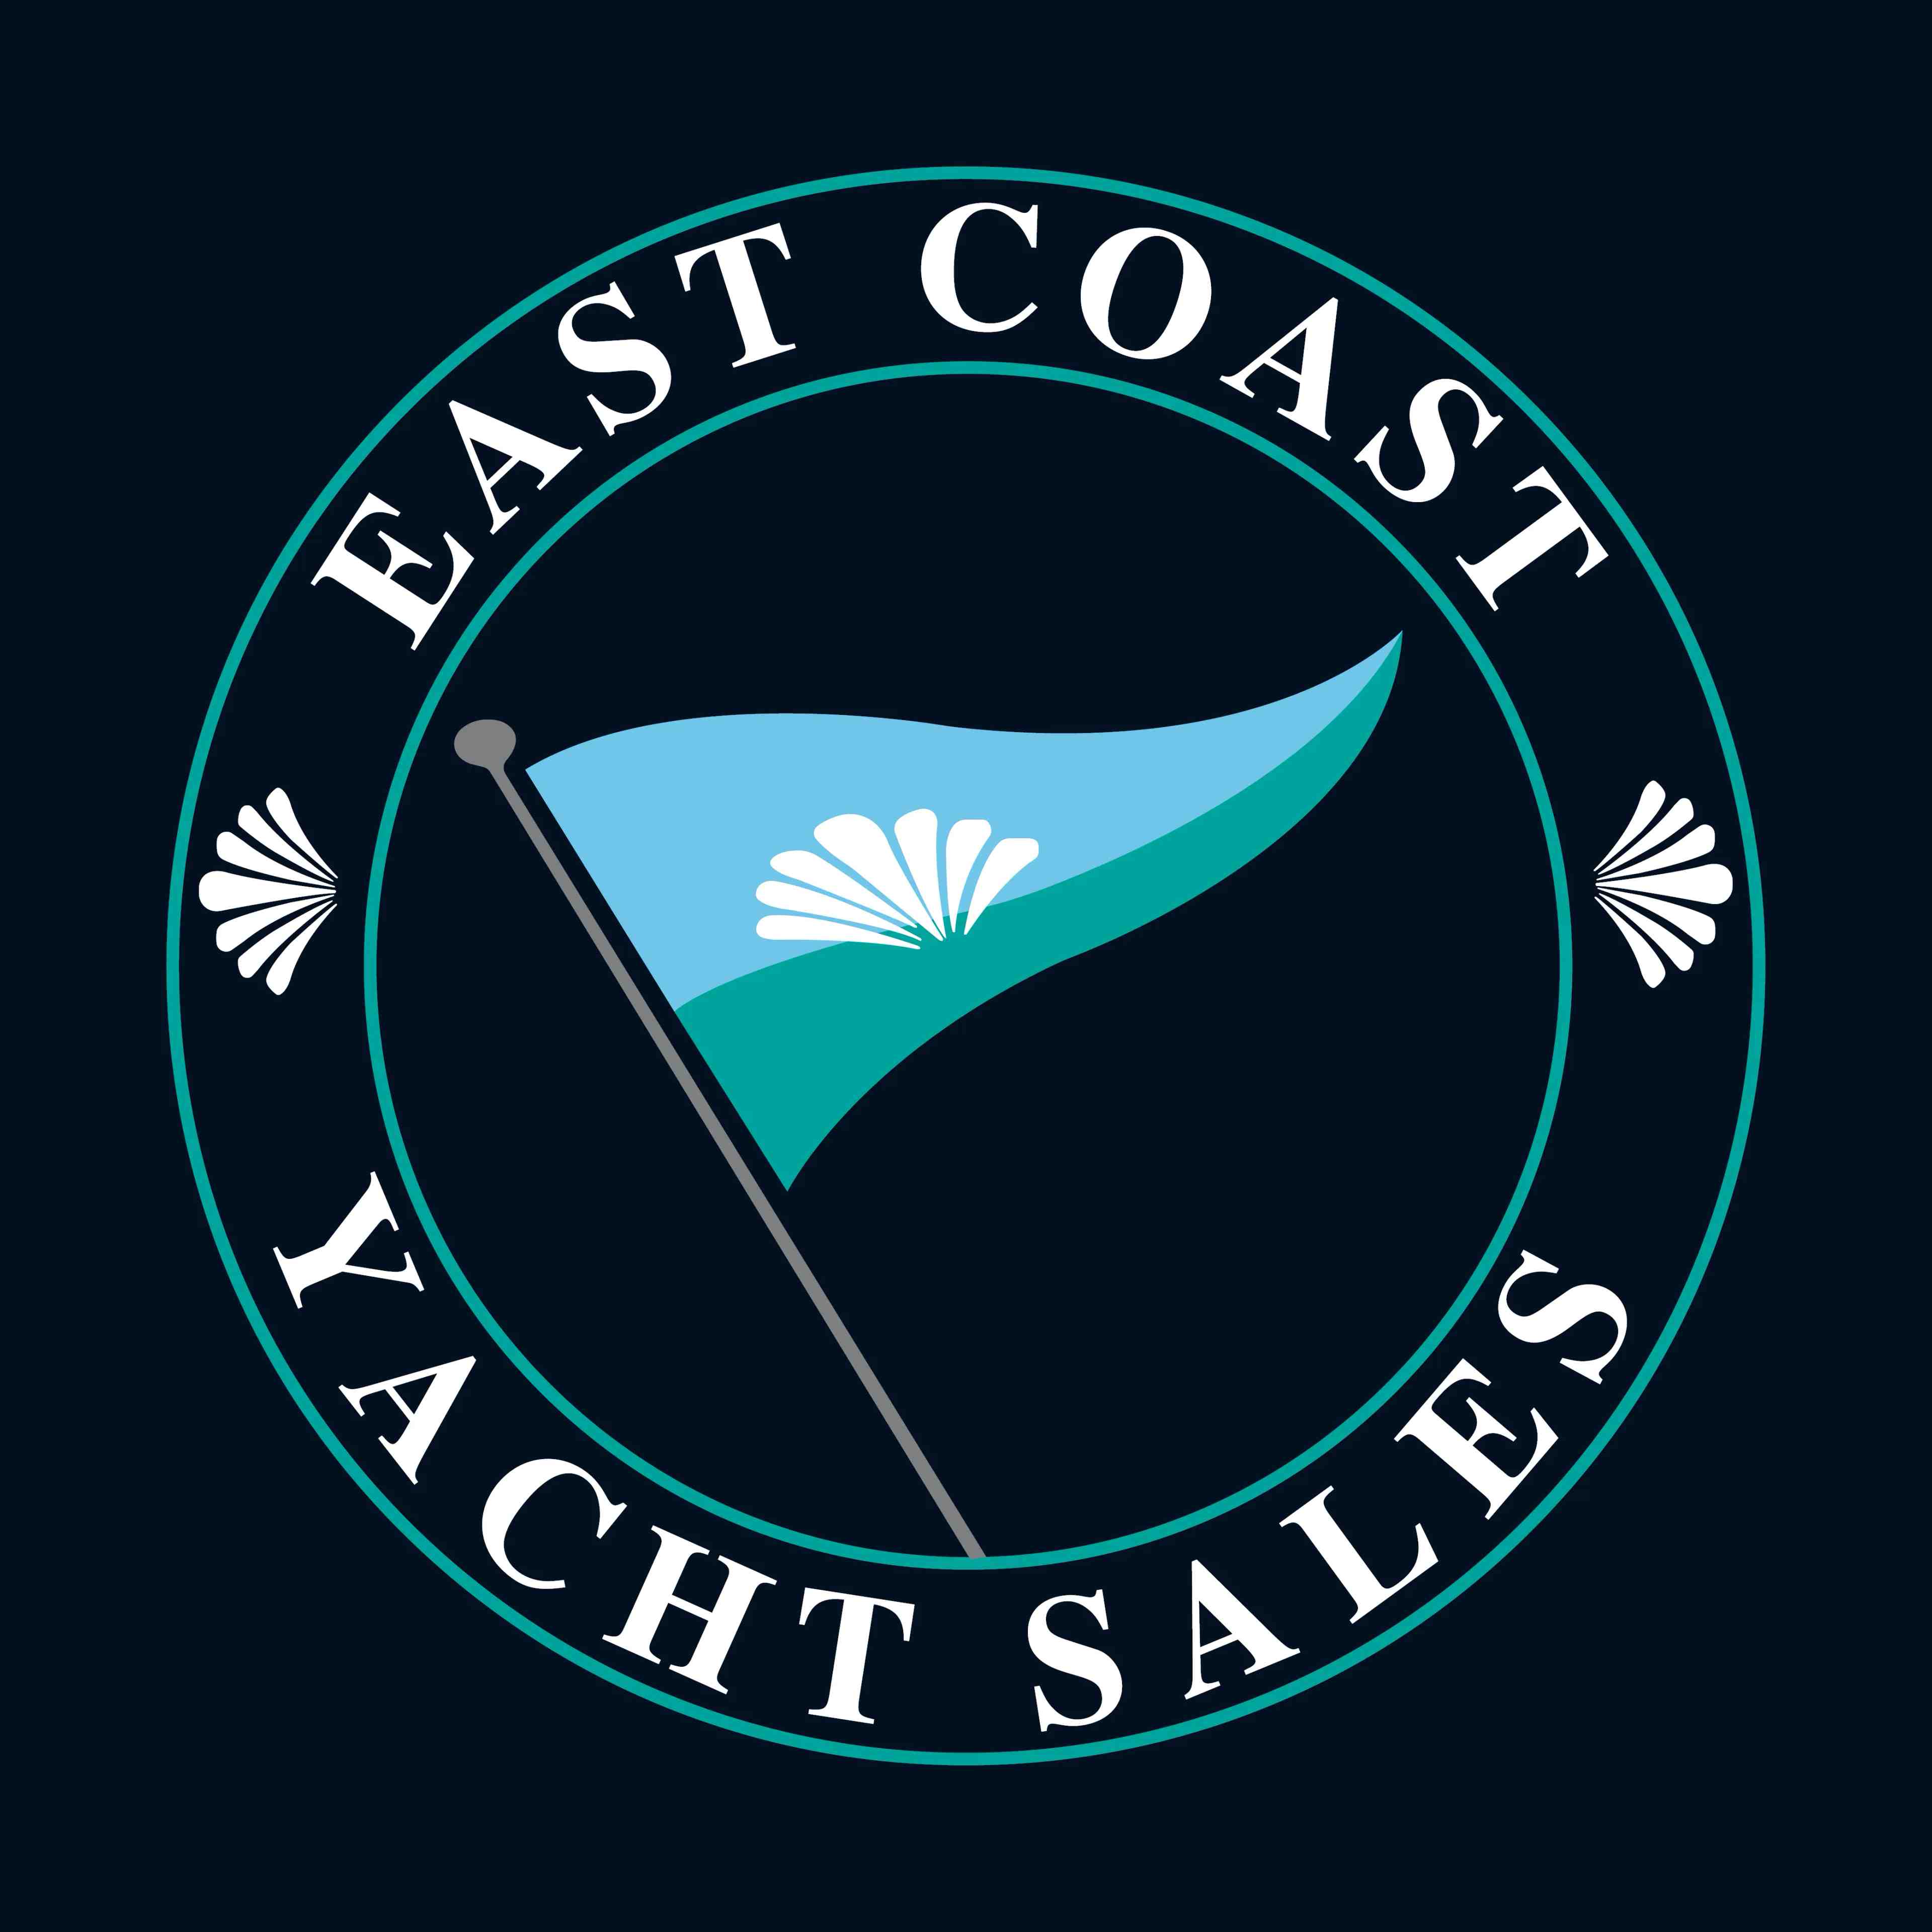 East Coast Yacht sales logo